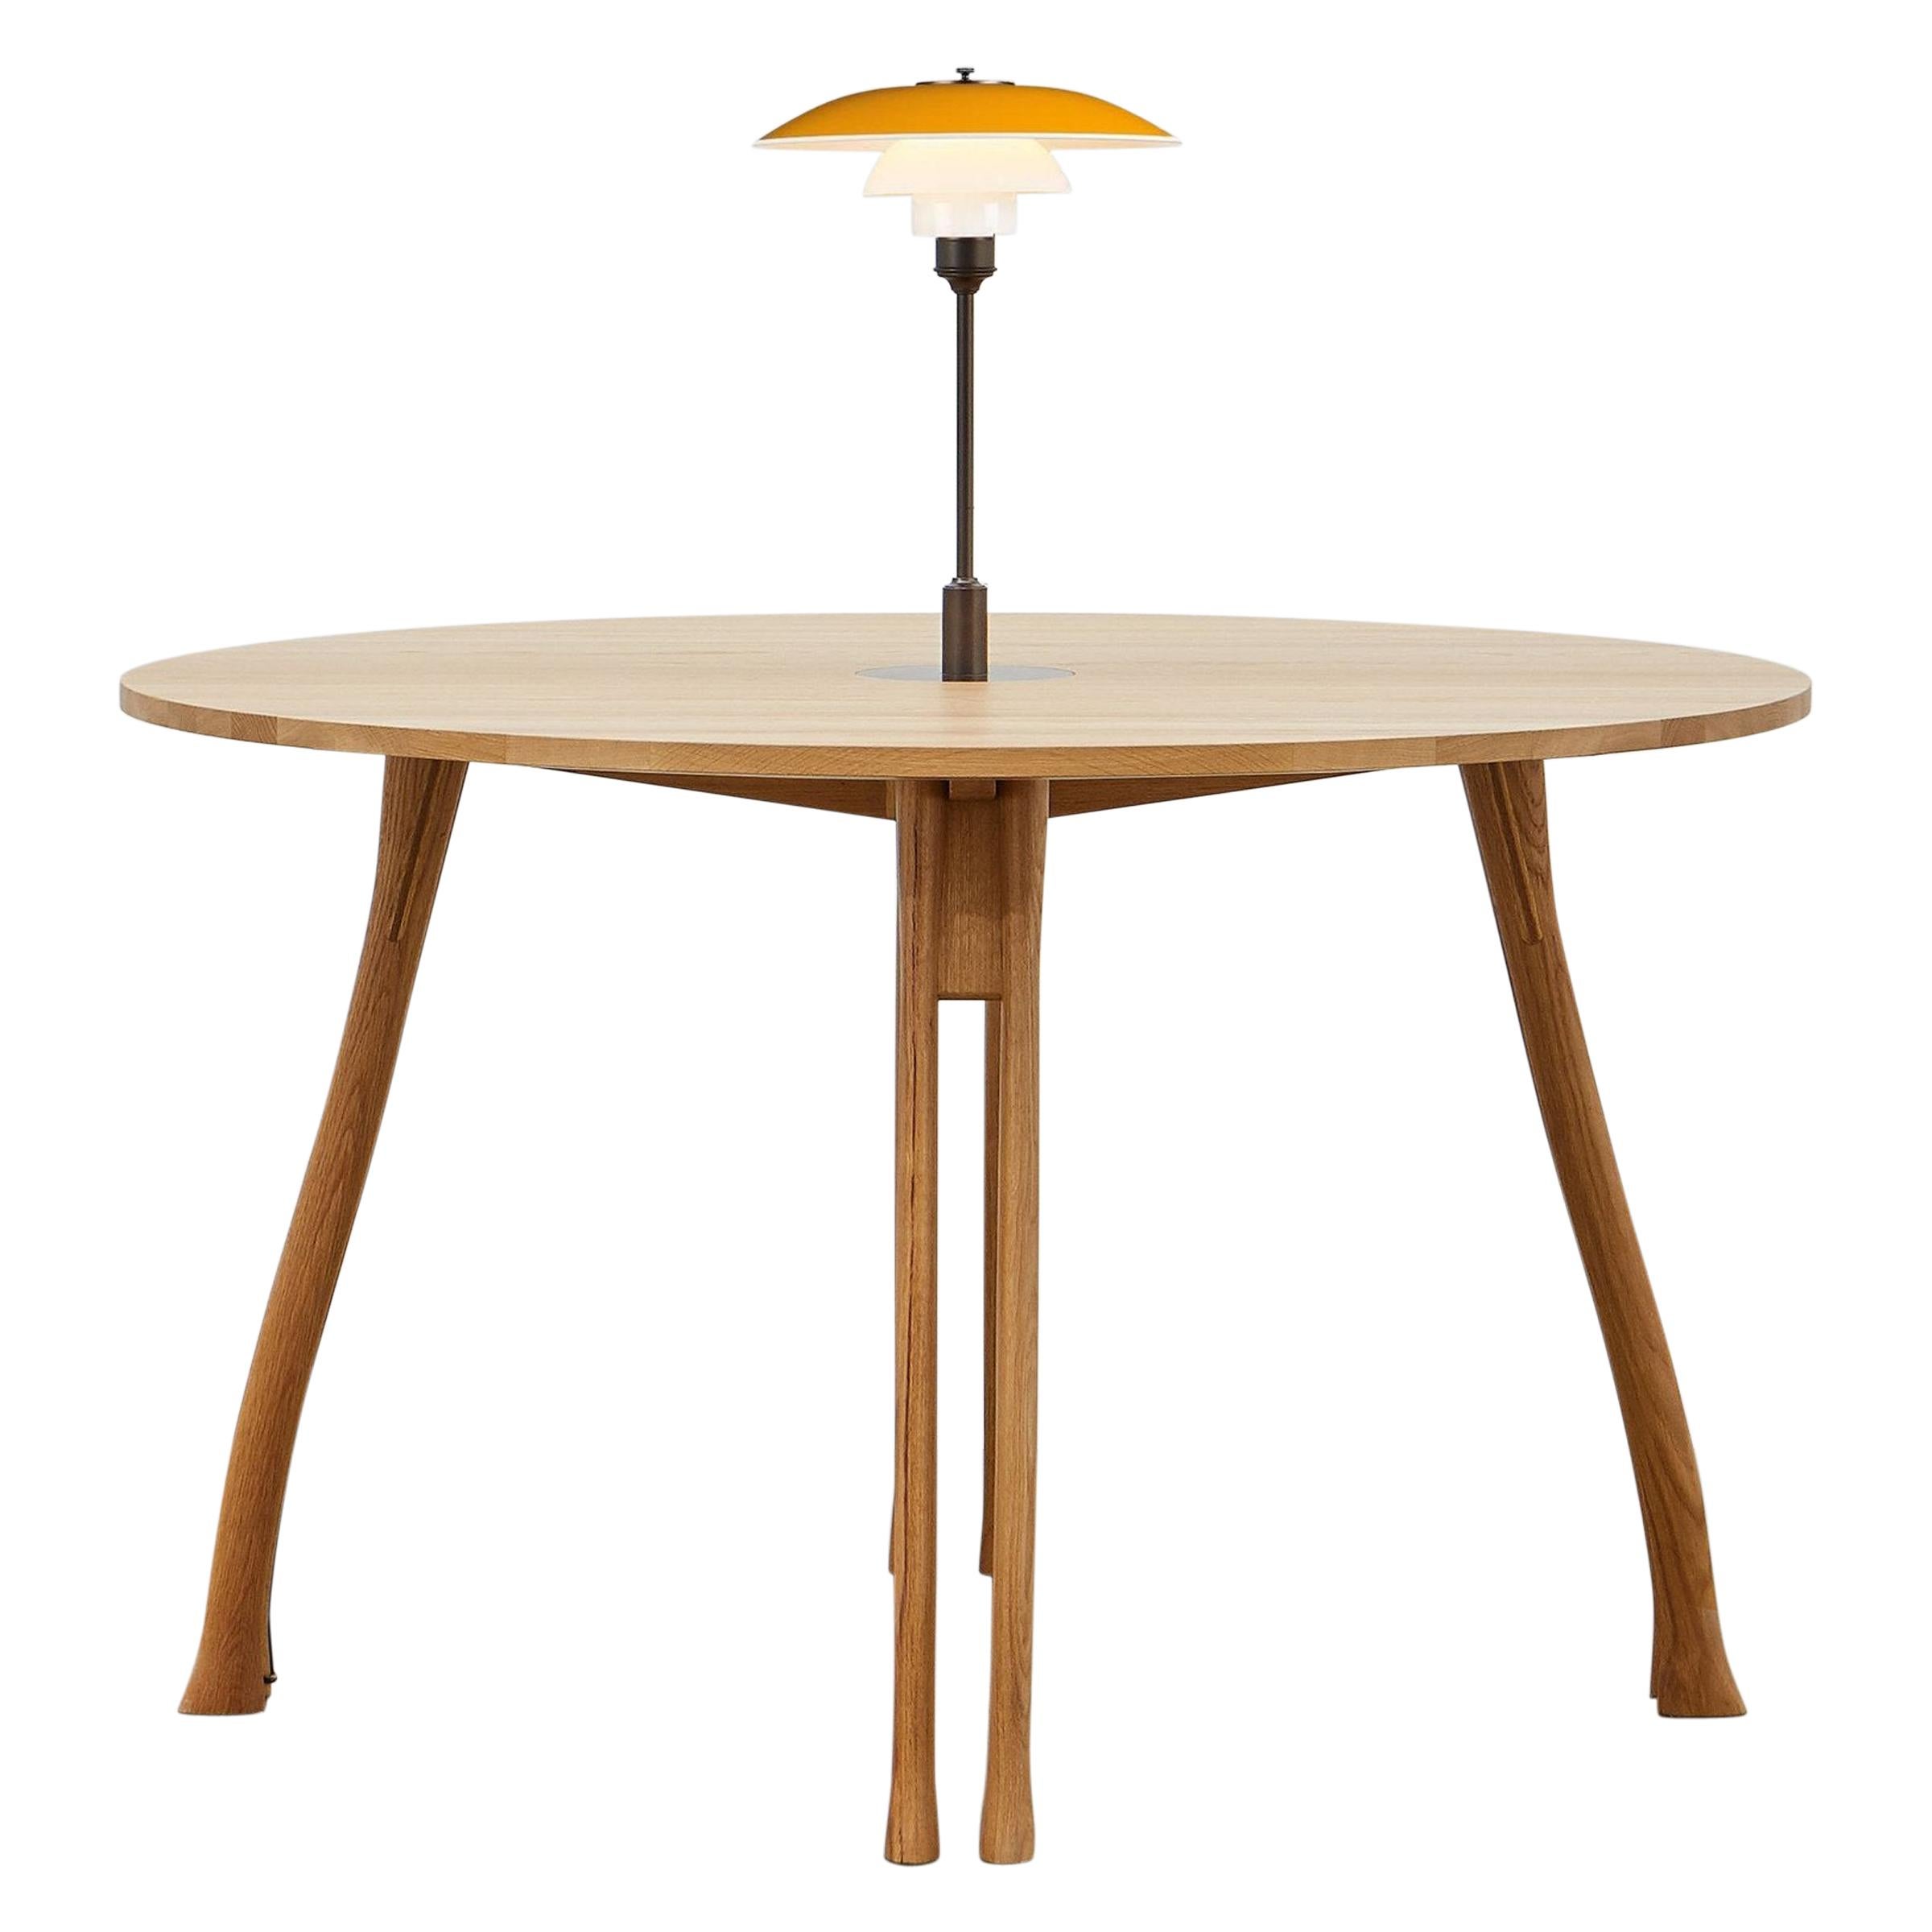 PH Axe Table, natural oak legs, veneer table plate, yellow PH 3 ½ - 2 ½ lamp For Sale